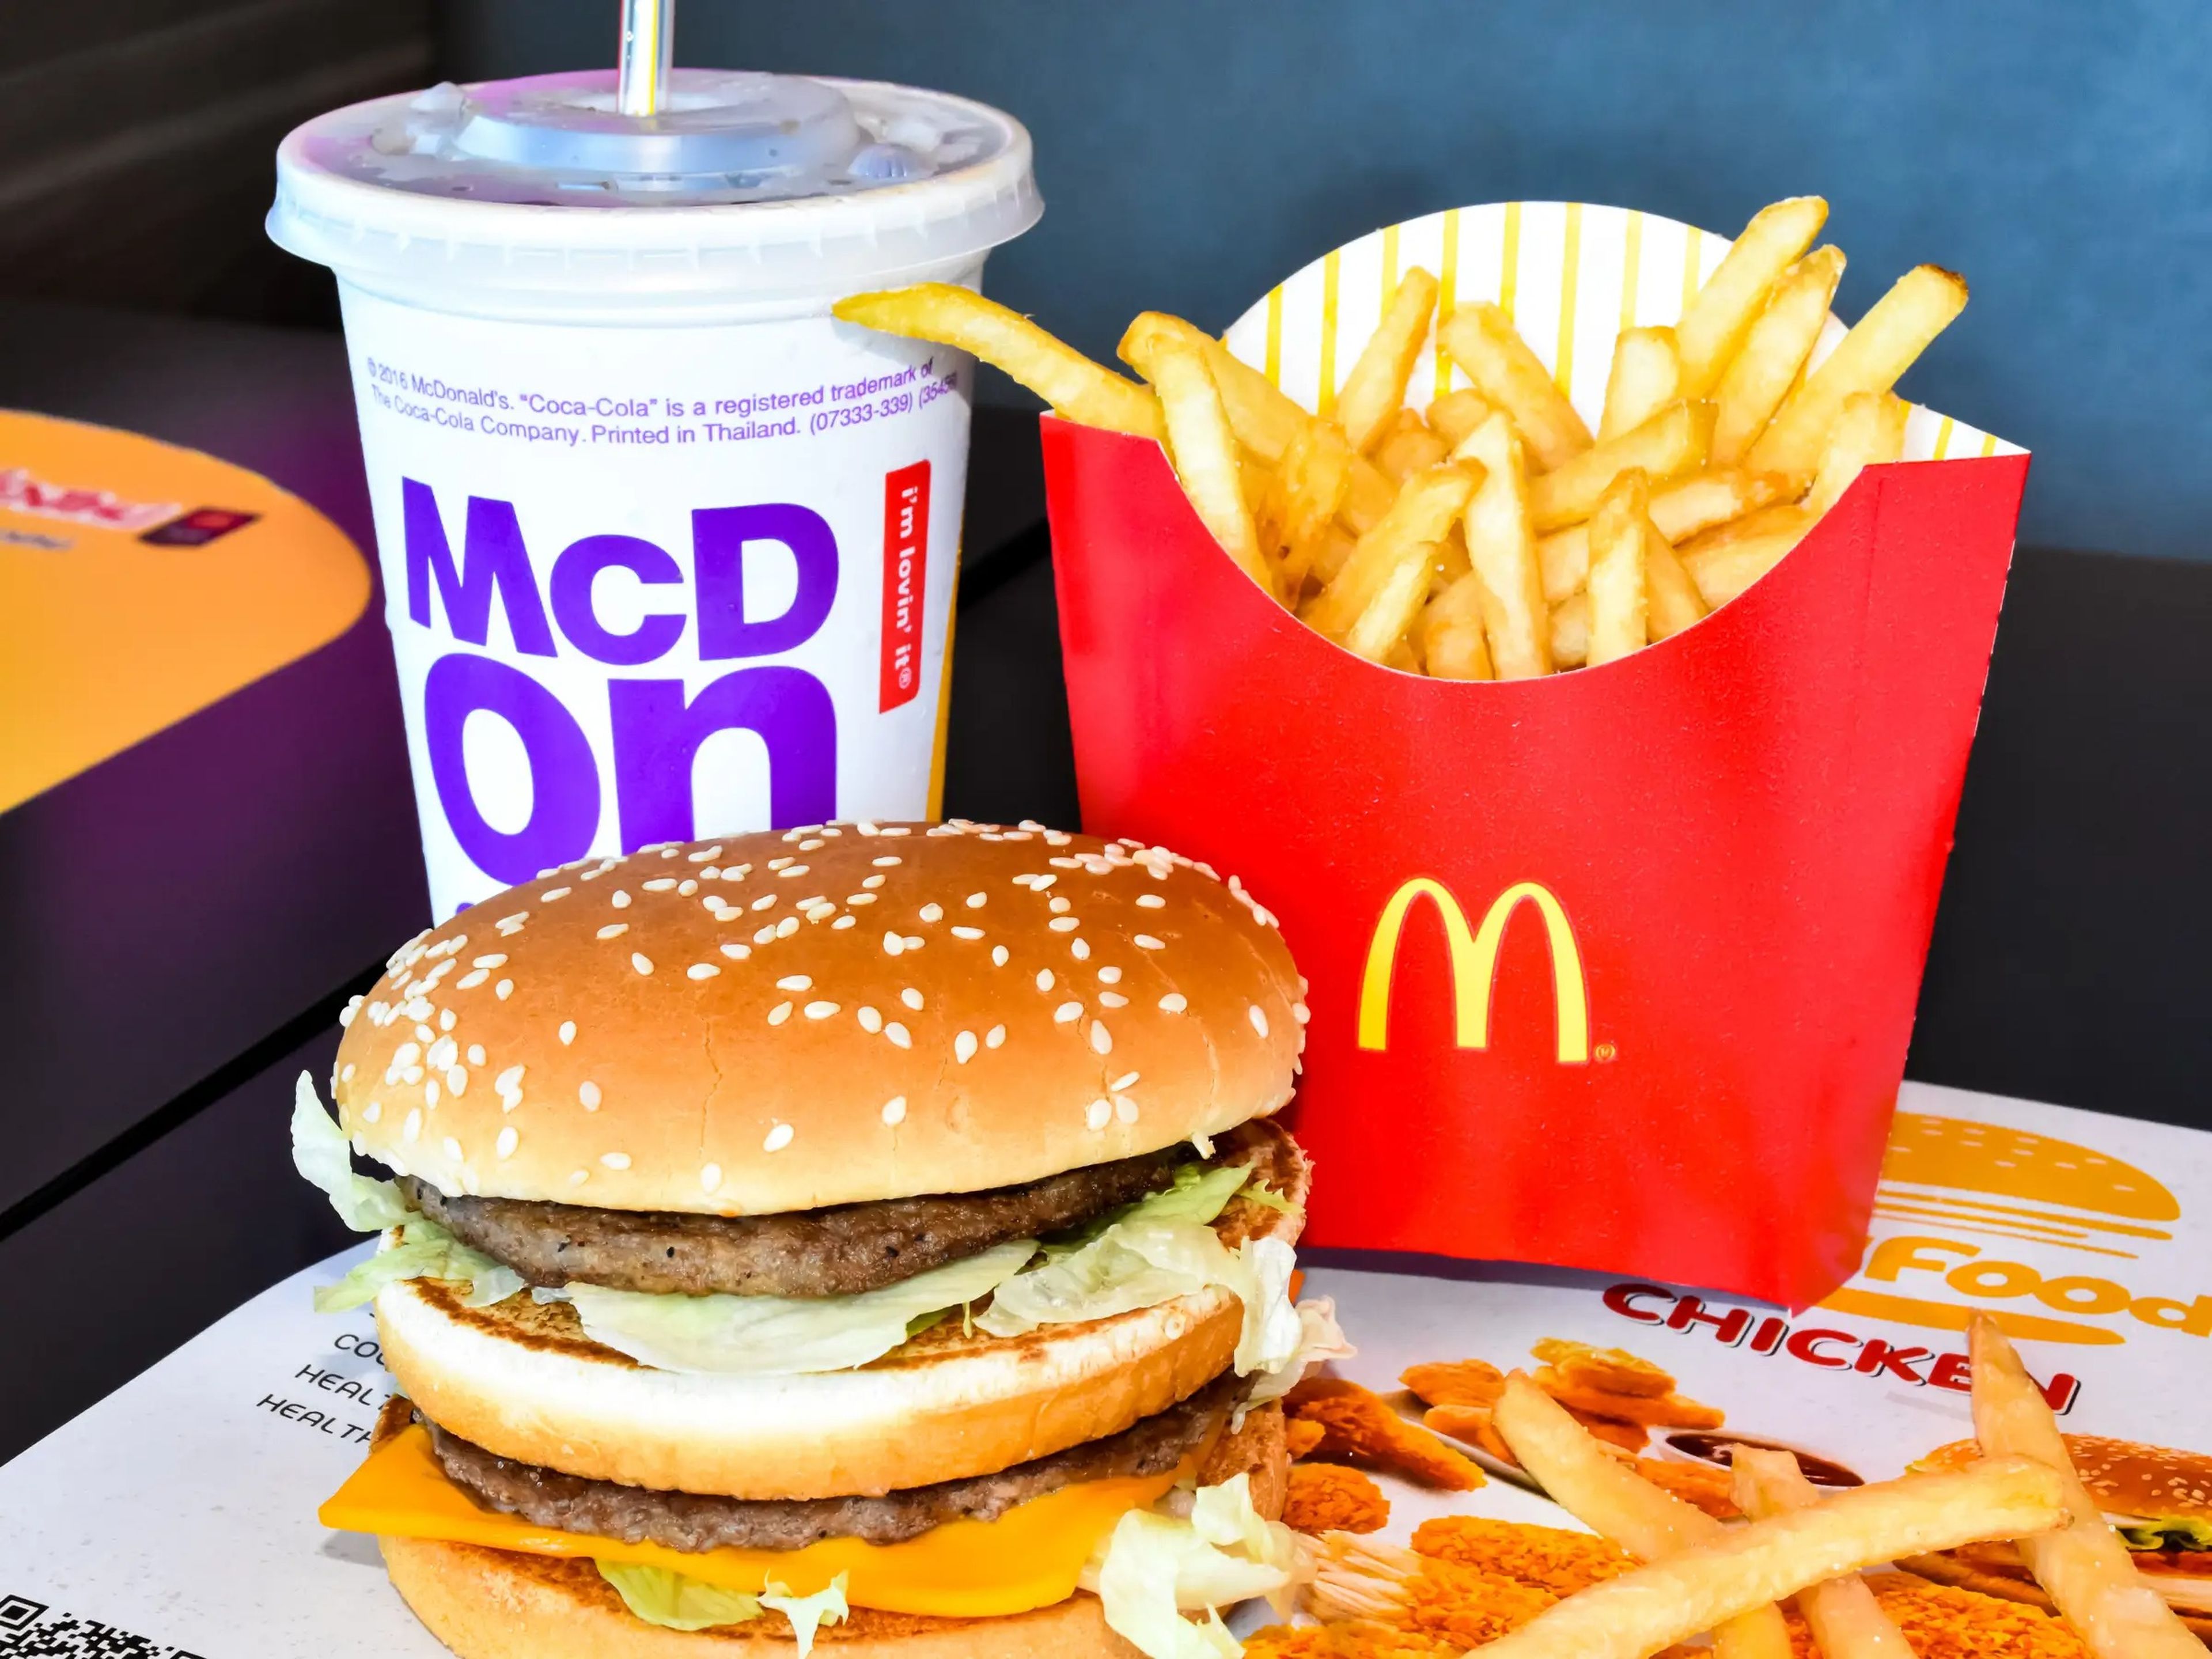 mcdonald's hamburger, fries, and drink on a tray